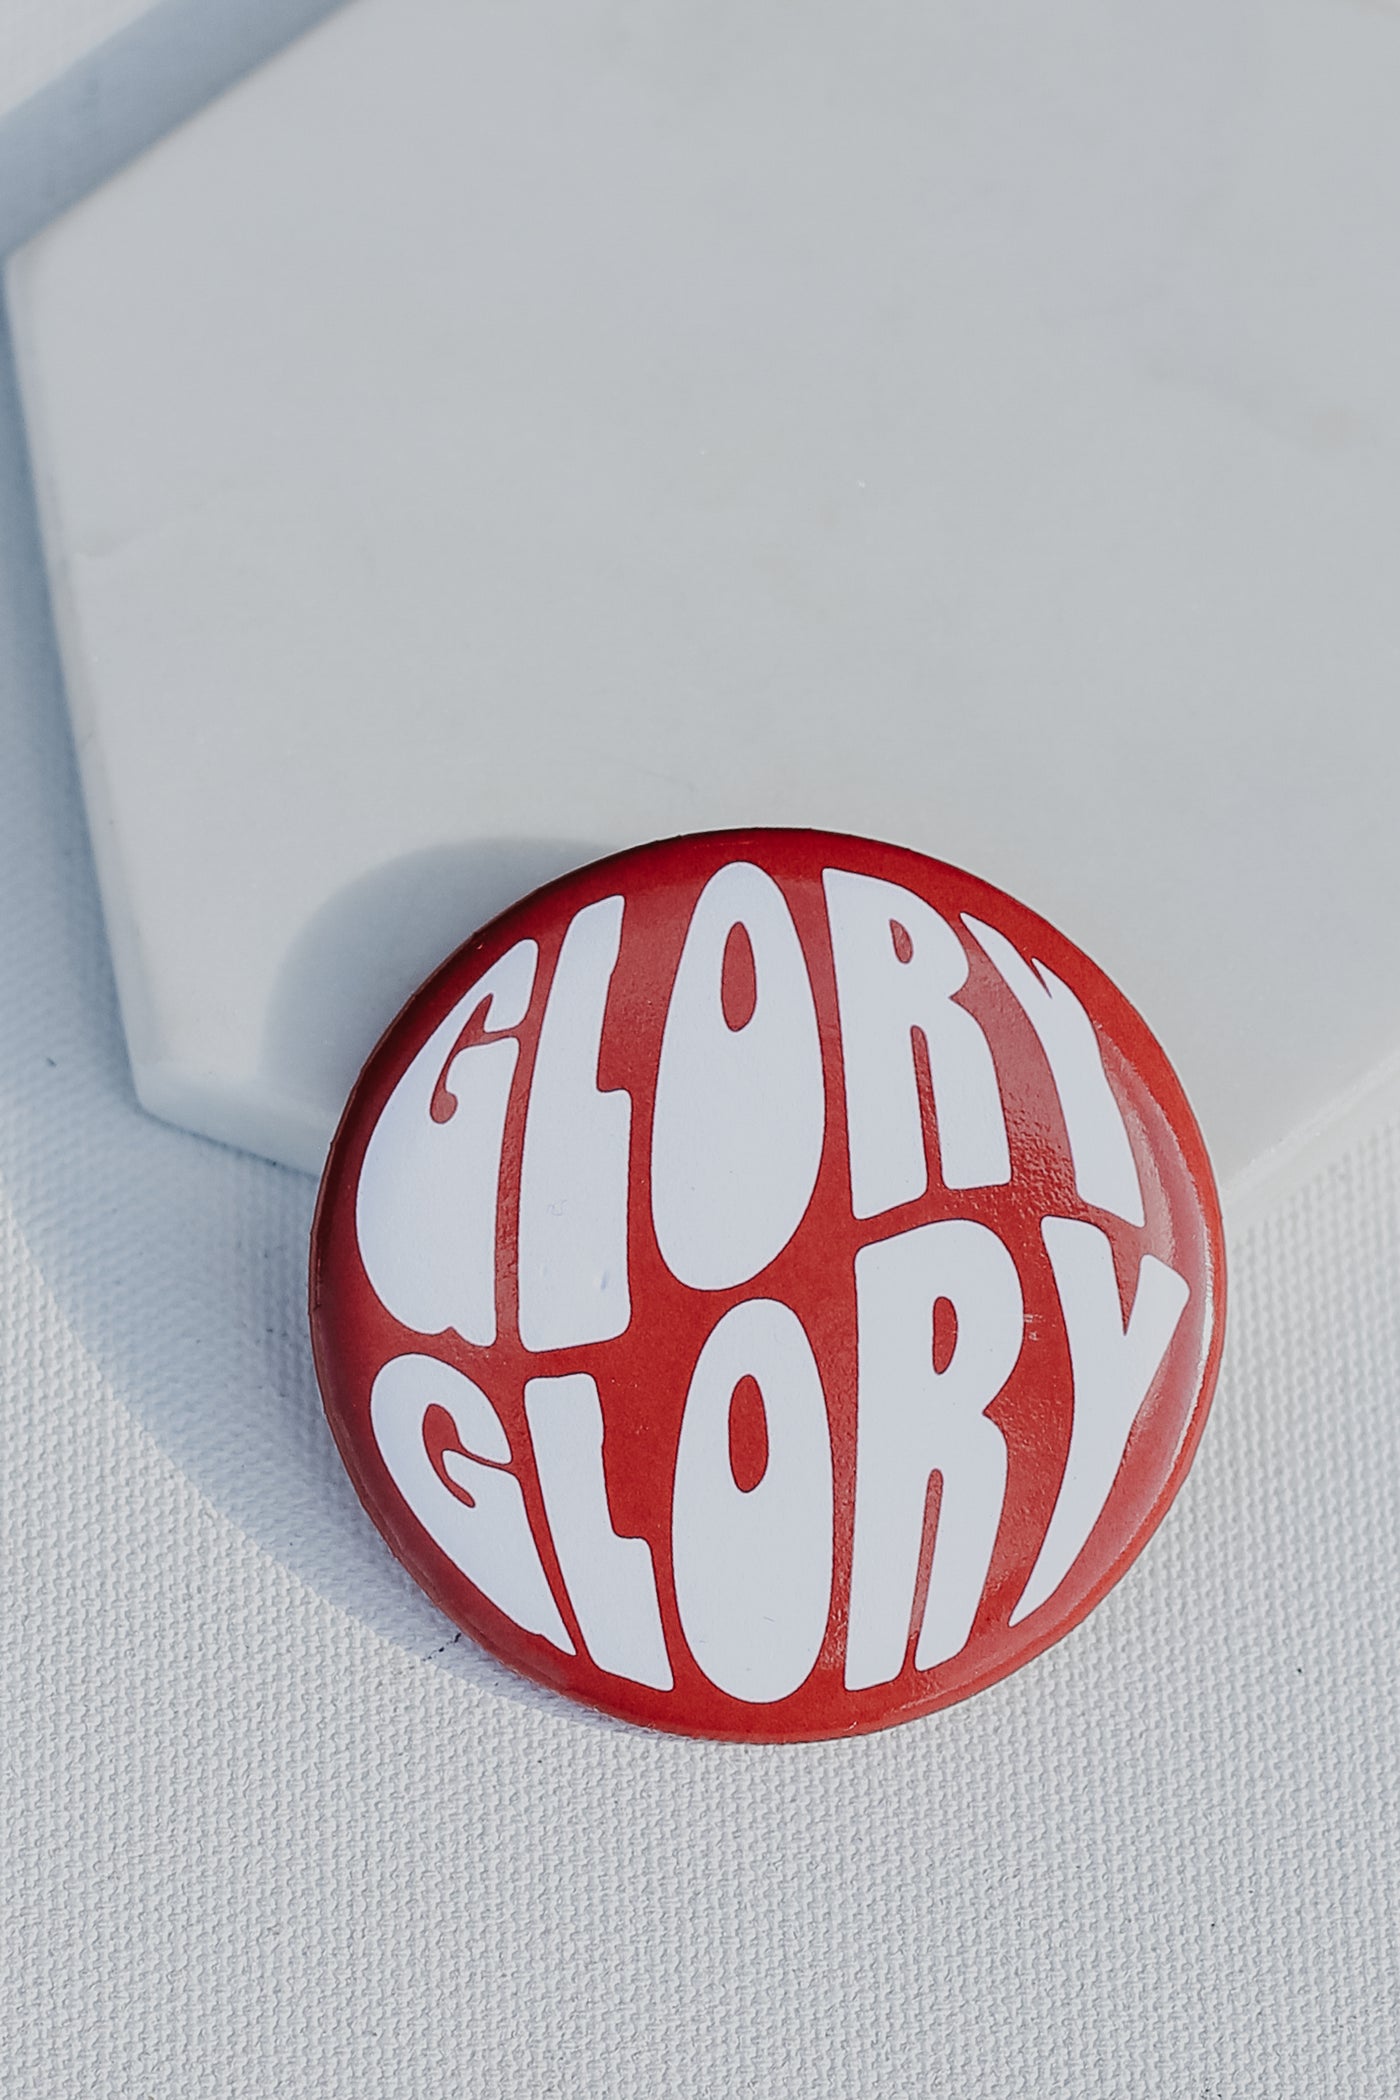 Red Glory Glory Button